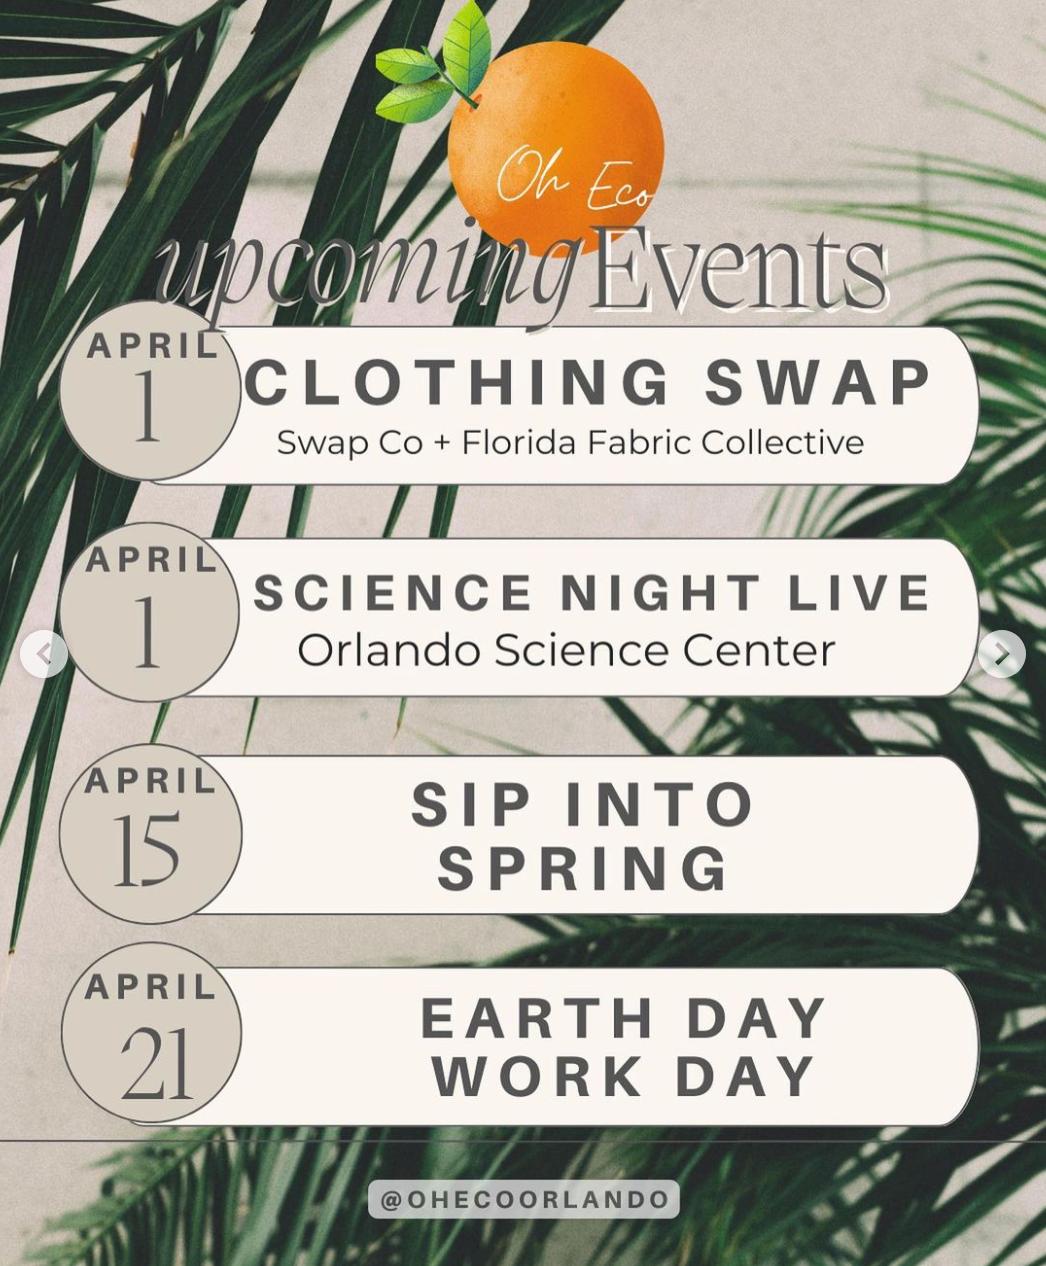 Sustainable, Zero waste events in Orlando, Florida in April